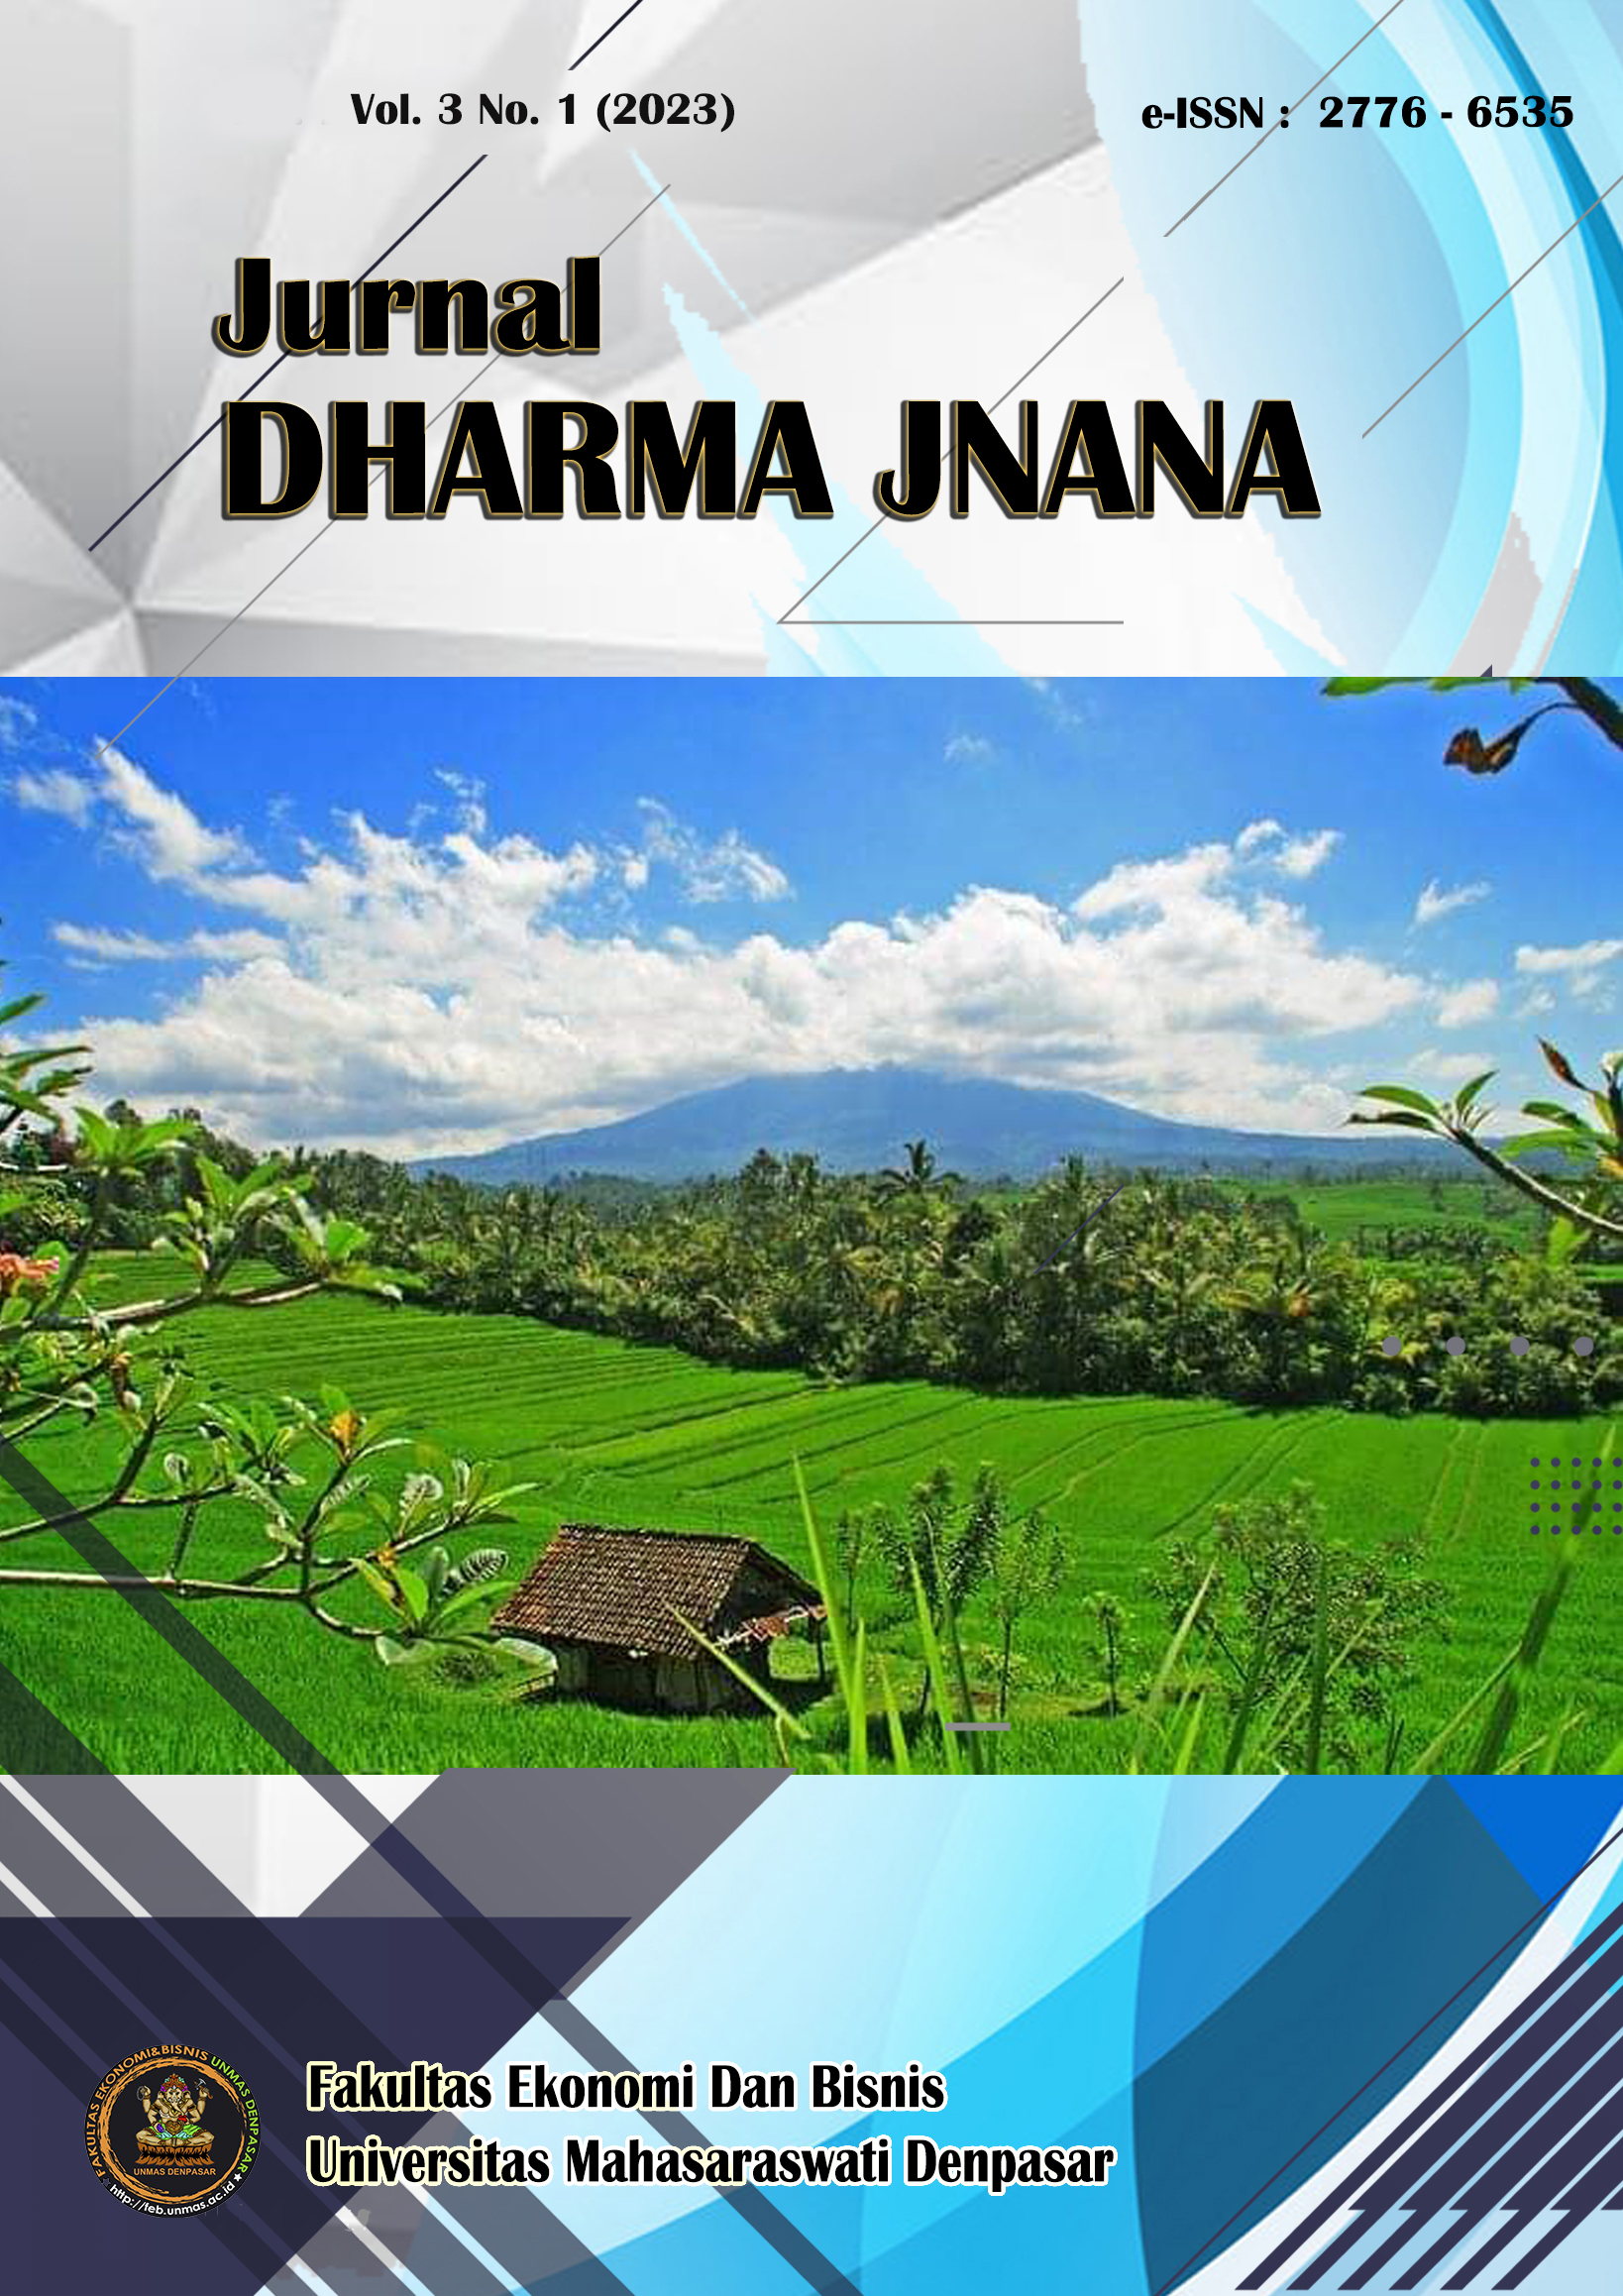 					View Vol. 3 No. 1 (2023): JURNAL DHARMA JNANA
				